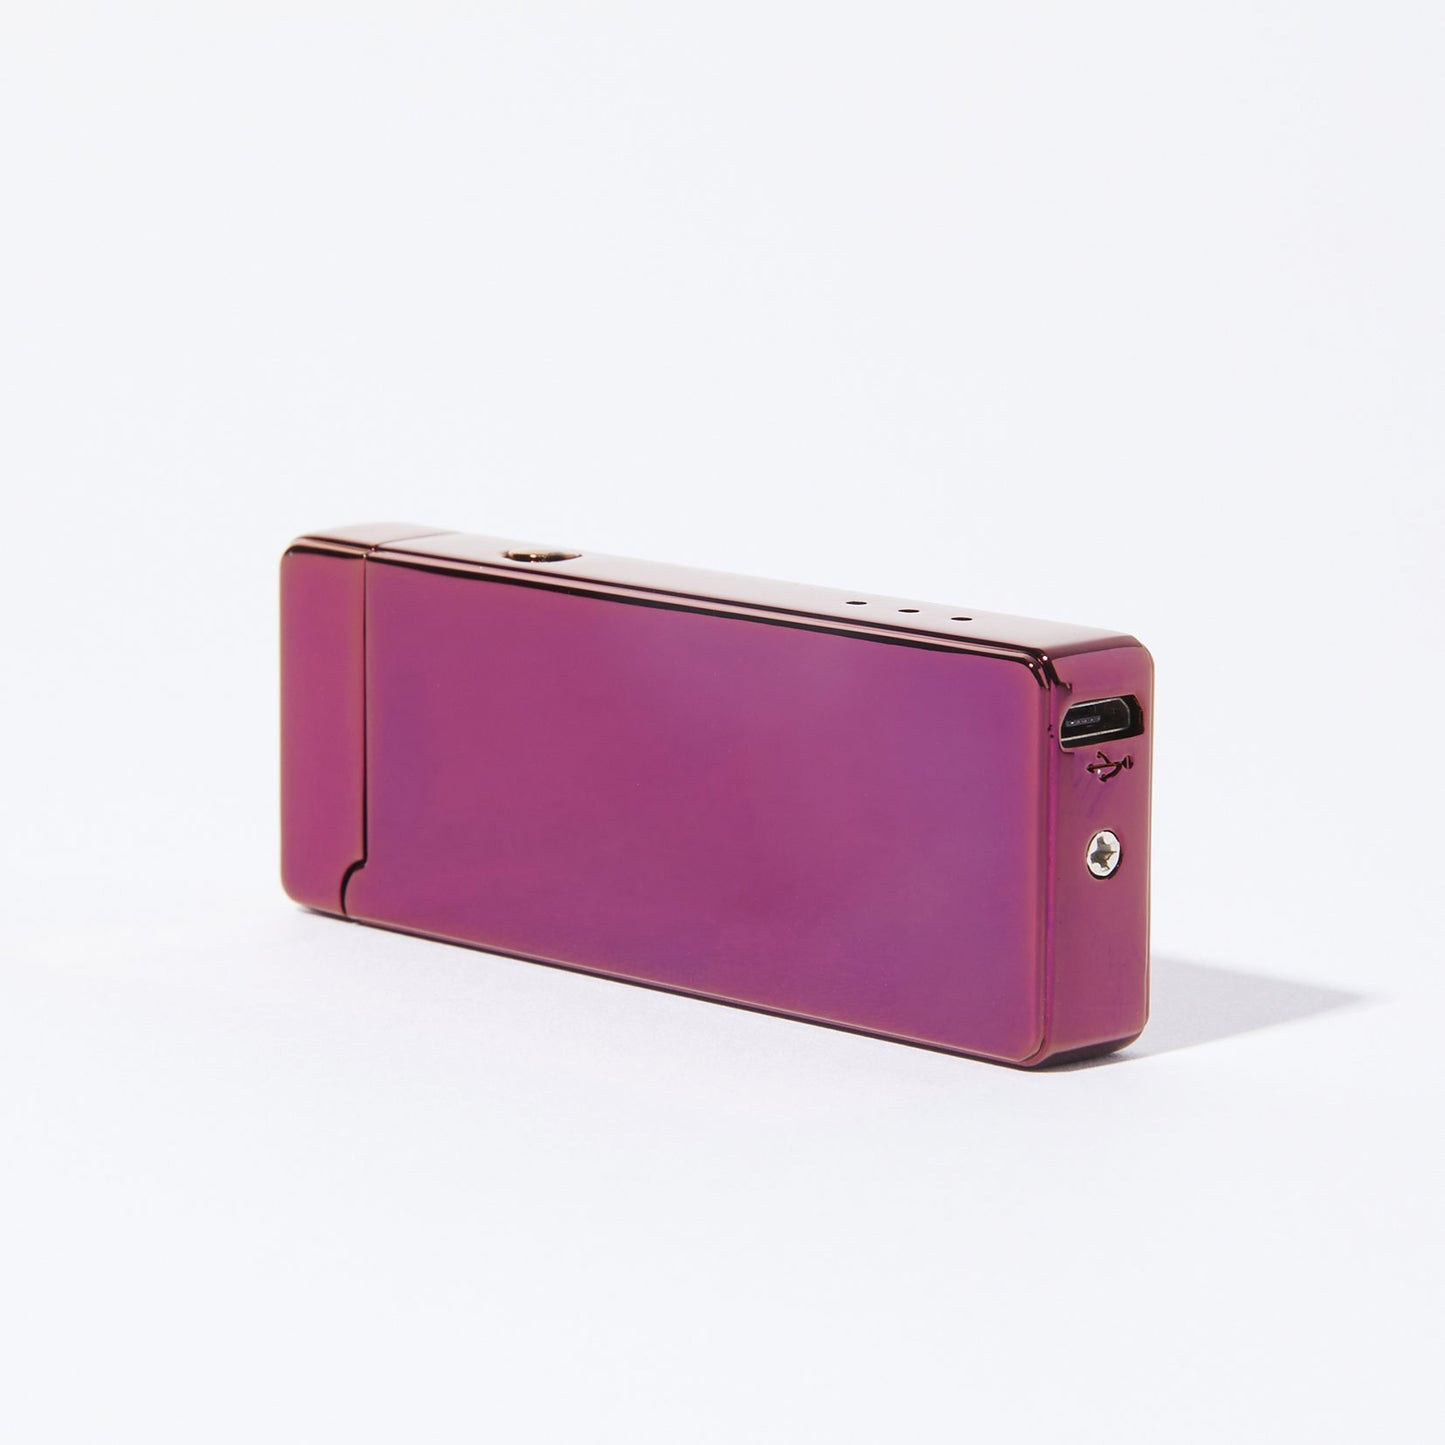 Pocket Electric Arc Lighter - Purple